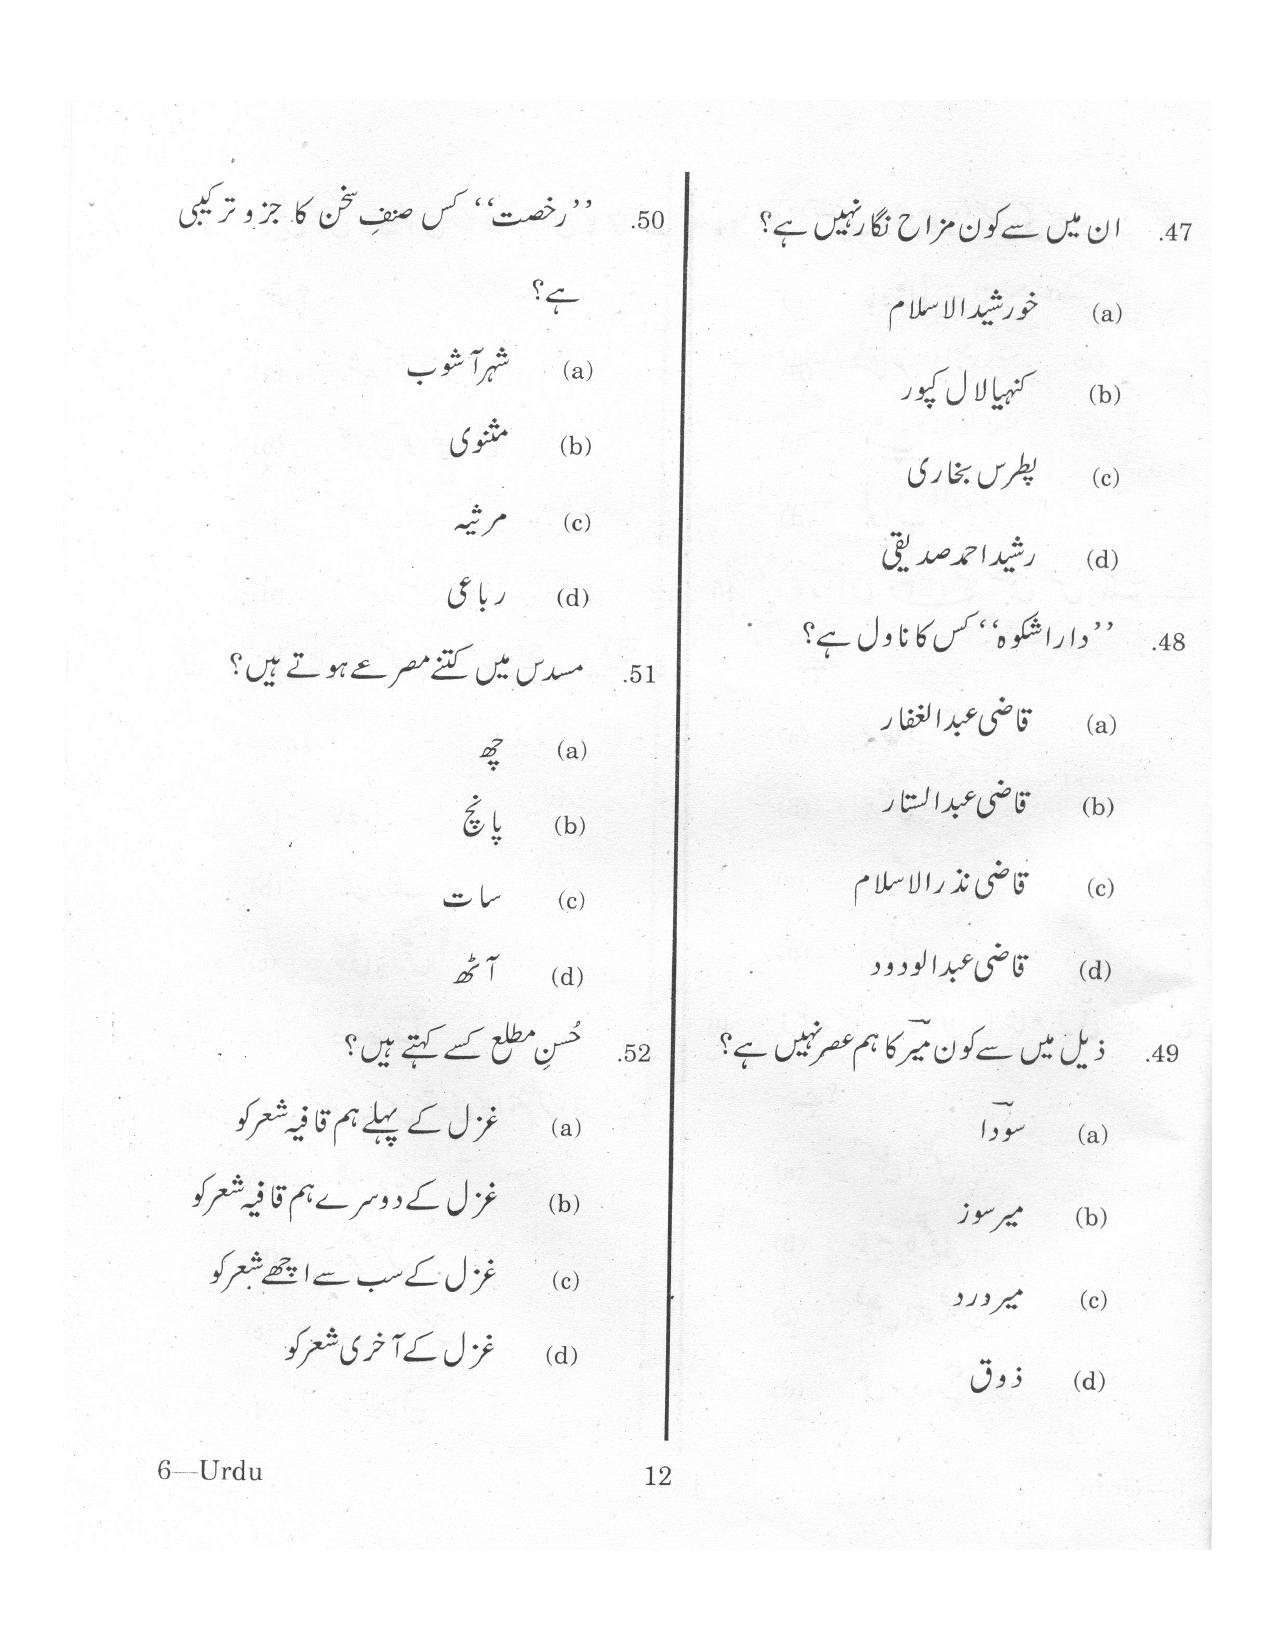 URATPG Urdu 2013 Question Paper - Page 11